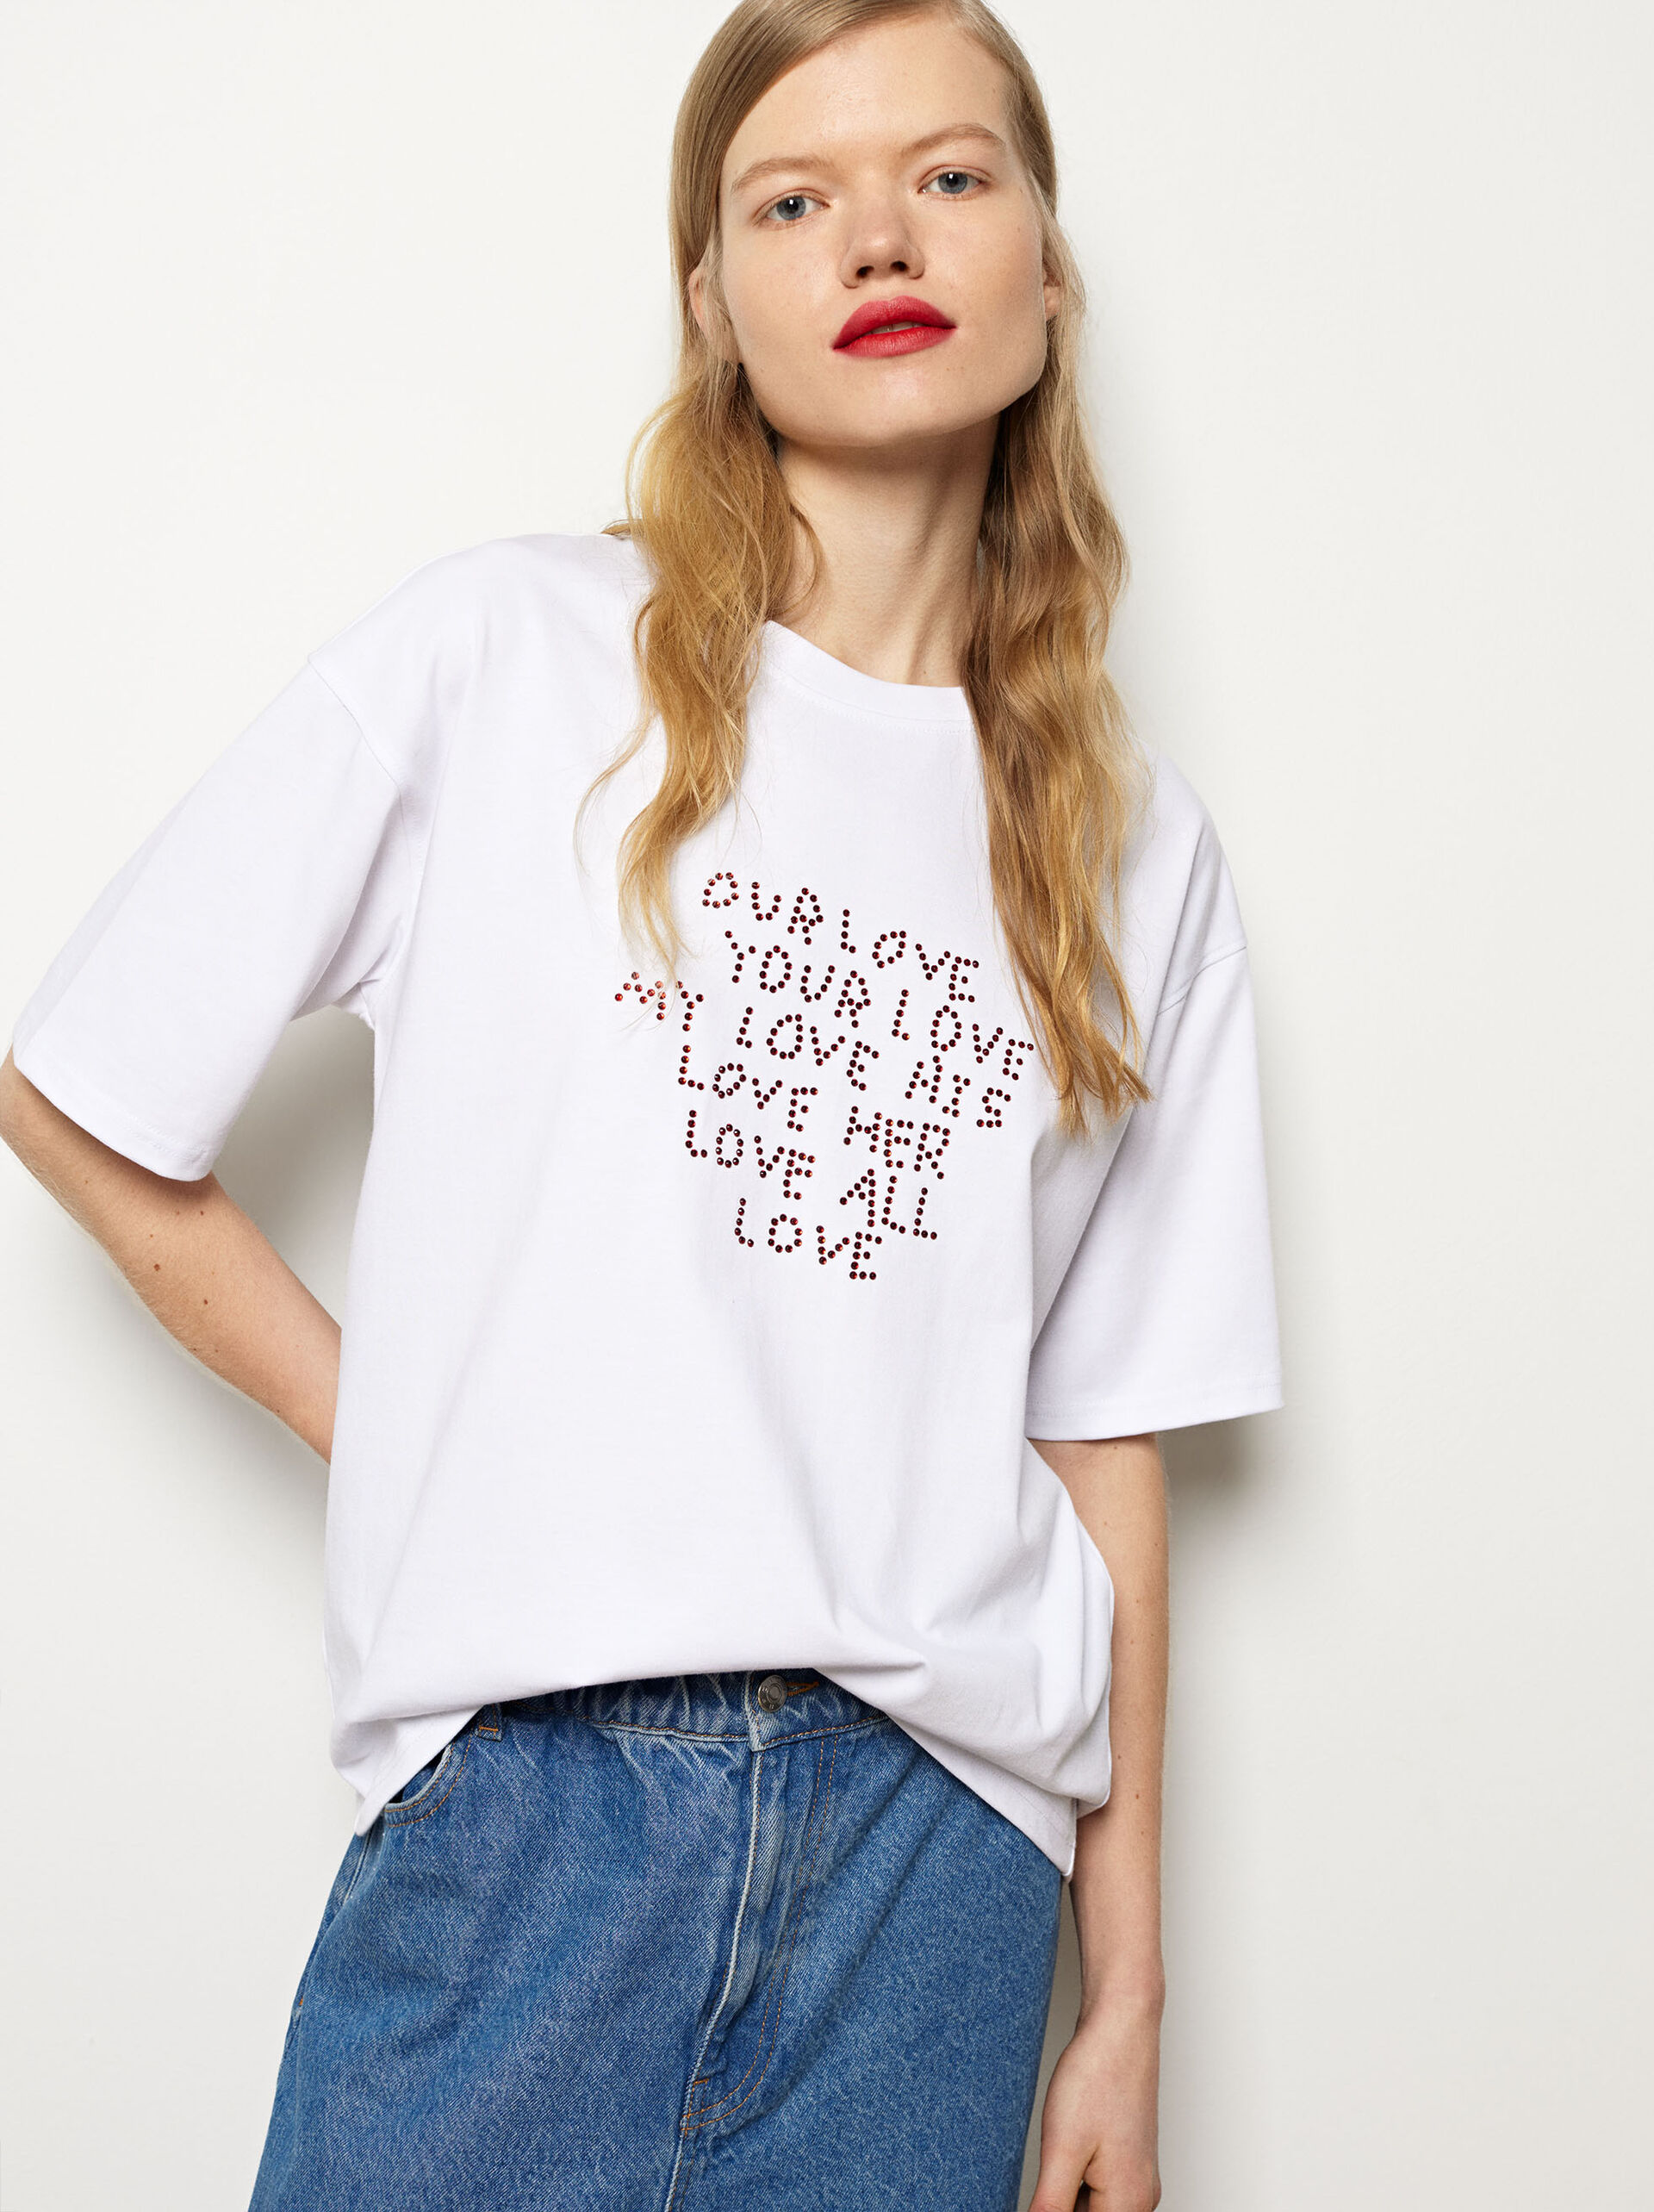 Exclusivo Online - T-Shirt Algodão Love image number 0.0